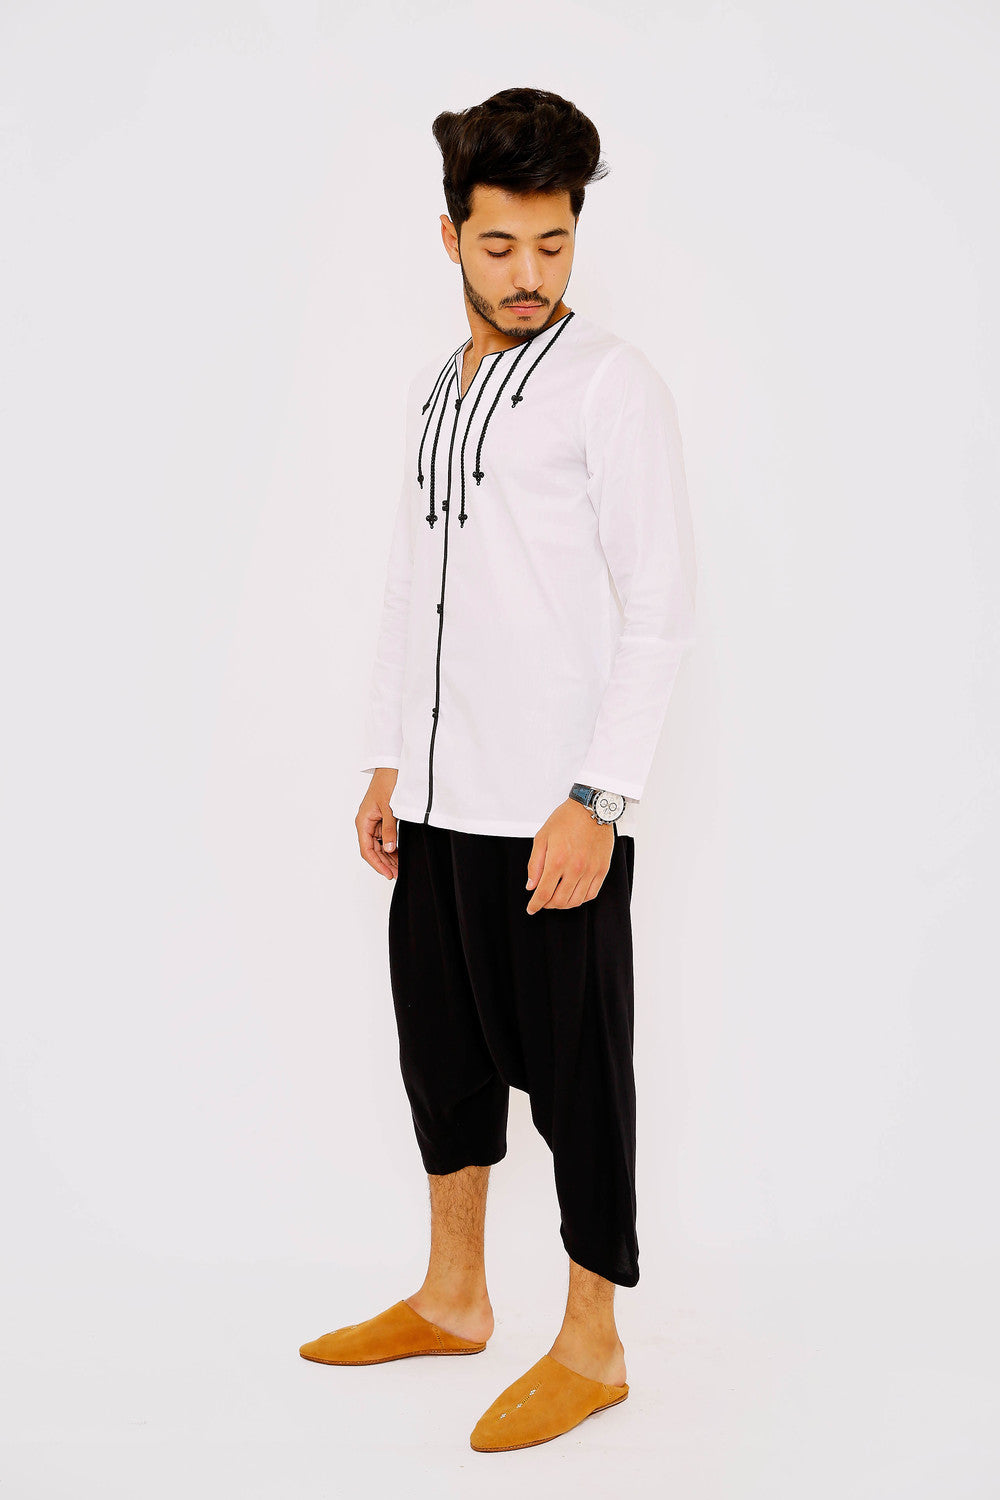 Jabador Ihssane Men's Long Sleeve Collarless Embroidered Shirt in White